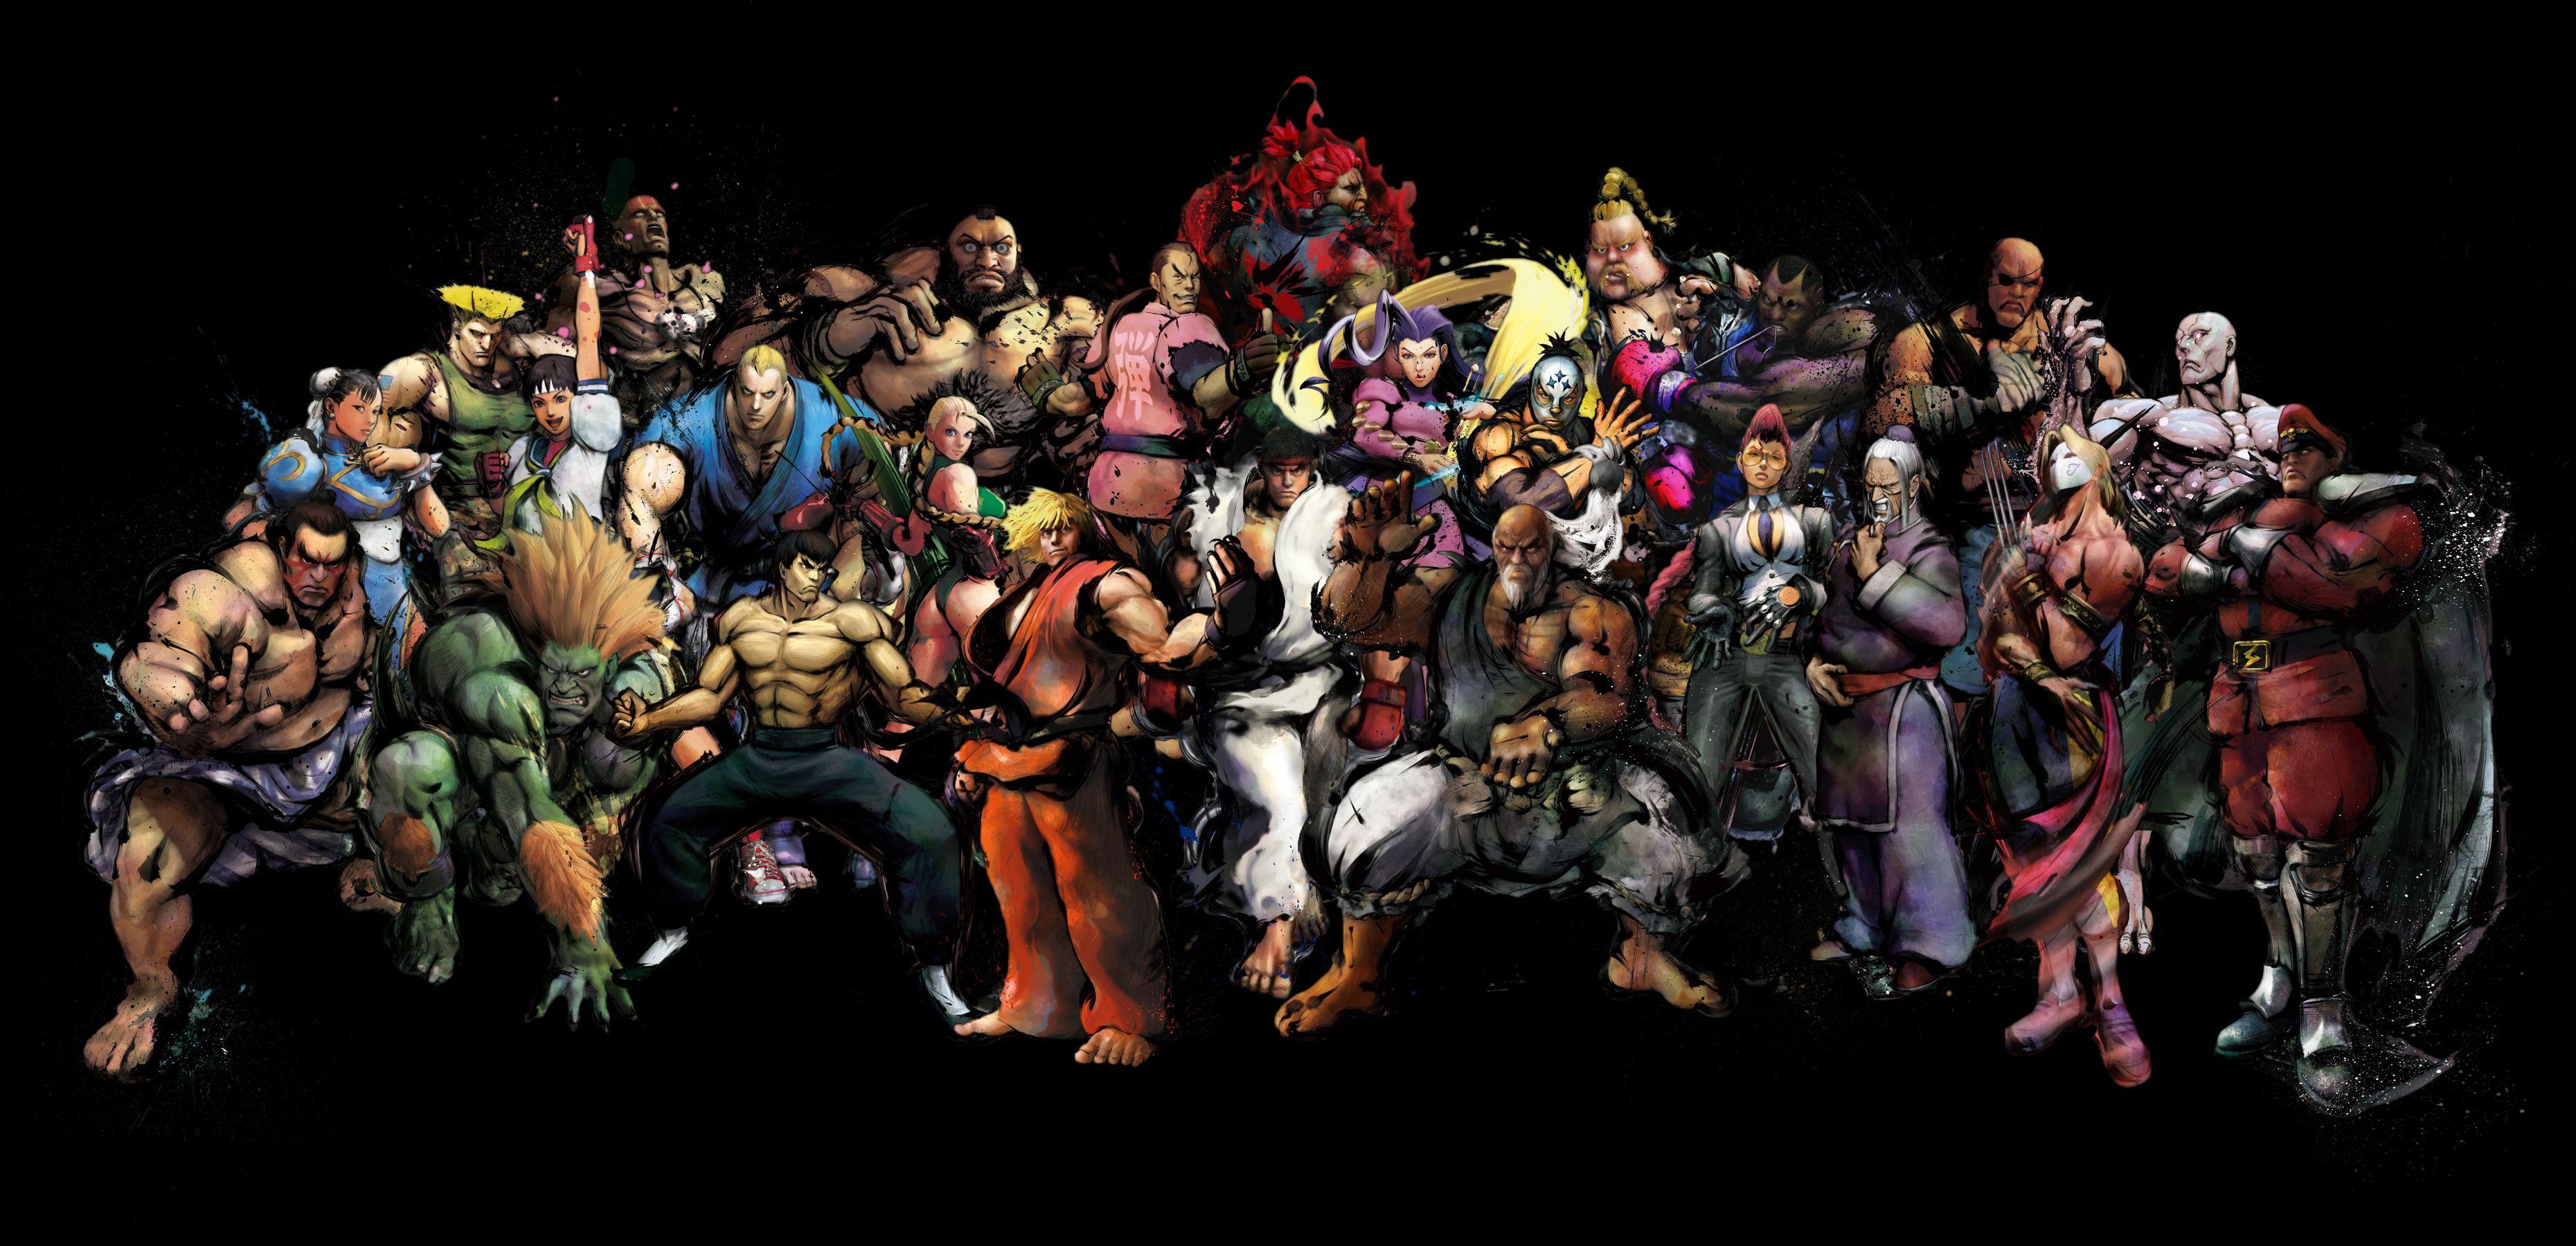 Wallpaper.wiki Street Fighter HD Wallpaper PIC WPD007609. Wallpaper